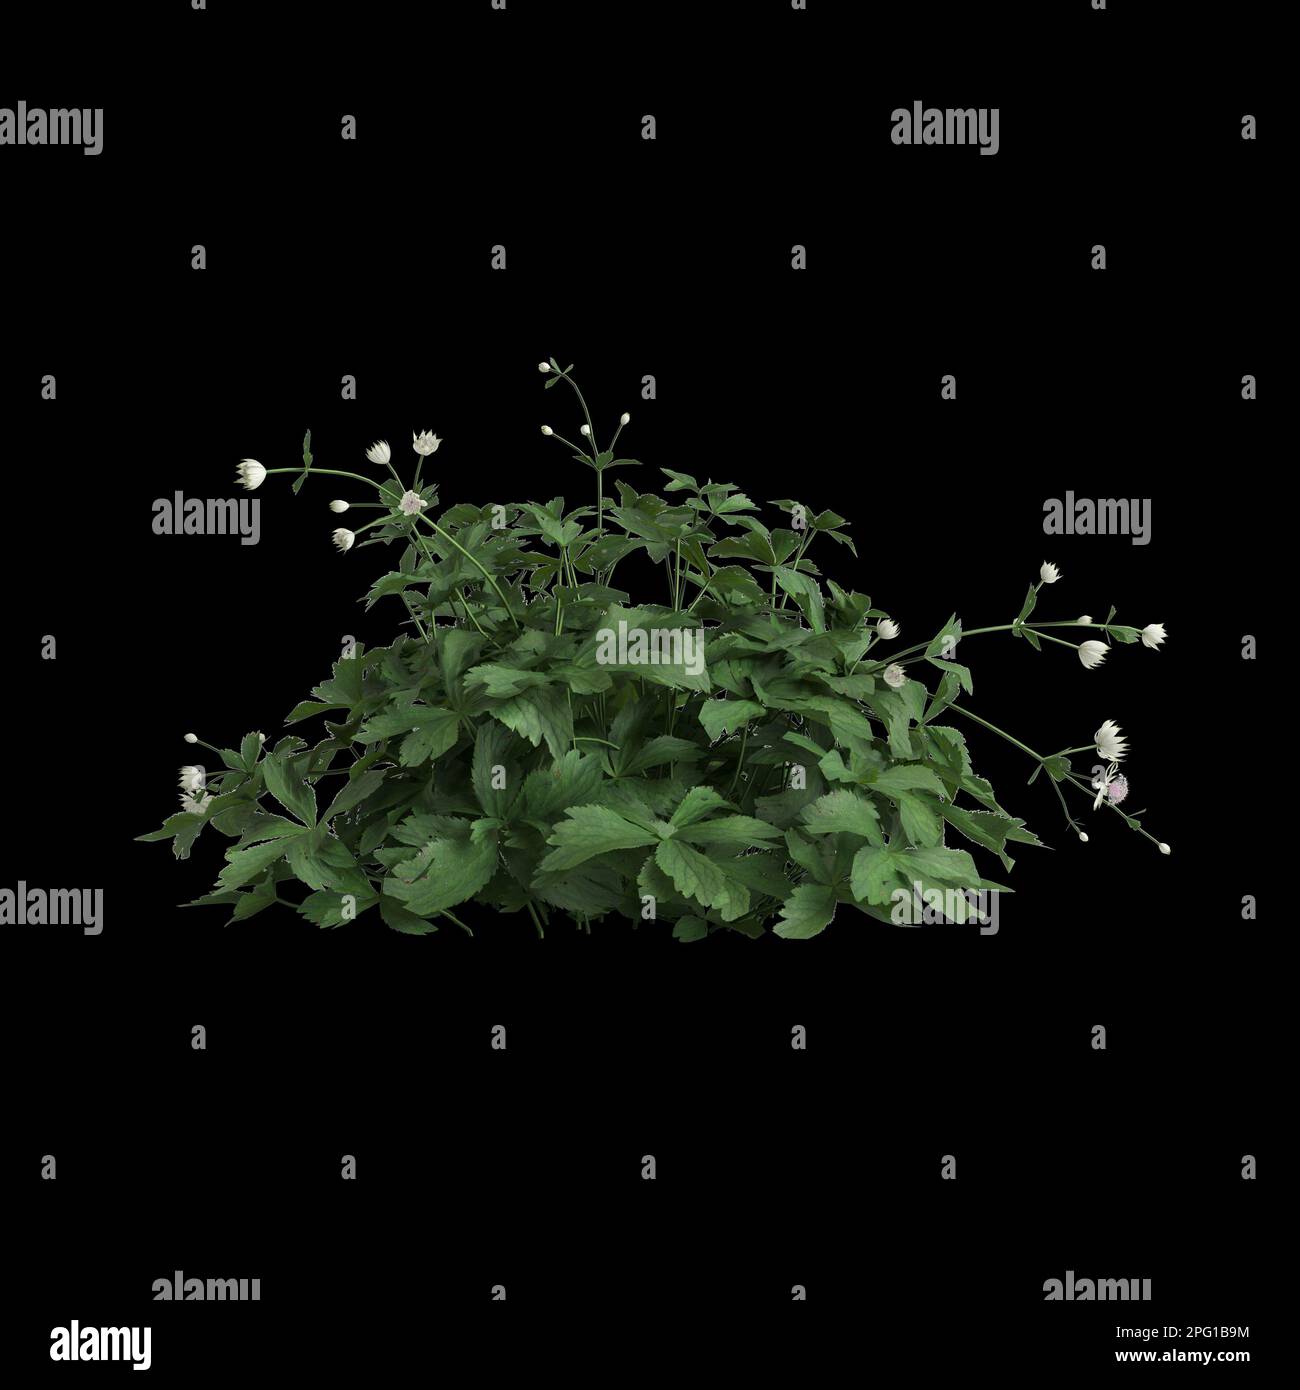 3d illustration of astrantia major bush isolated on black background Stock Photo